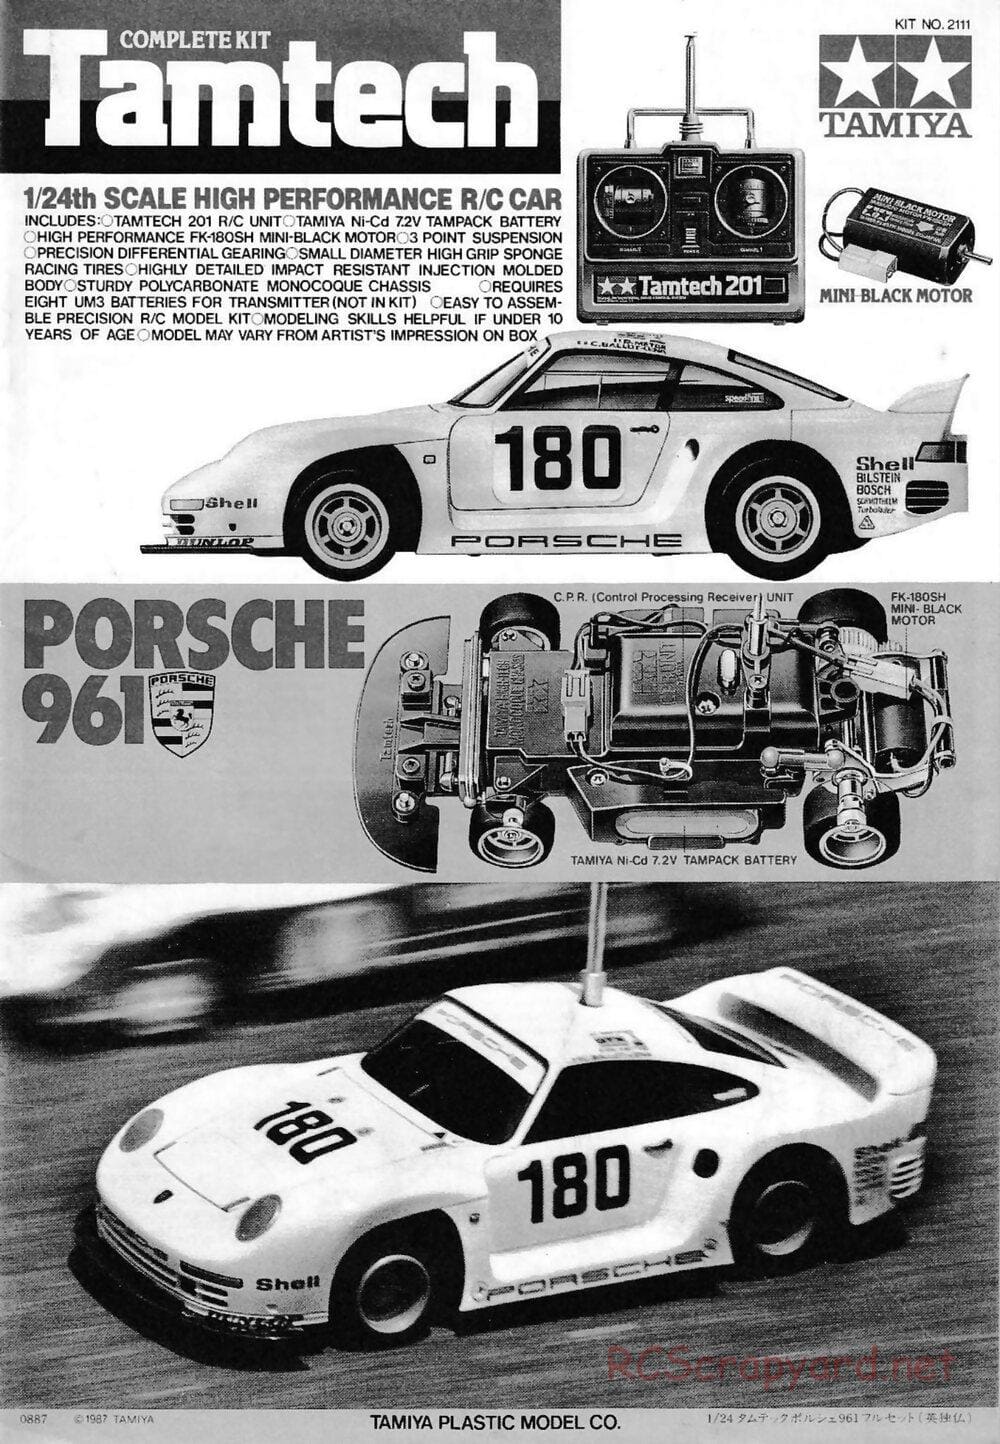 Tamiya - Tamtech - Porsche 961 Chassis - Manual - Page 1